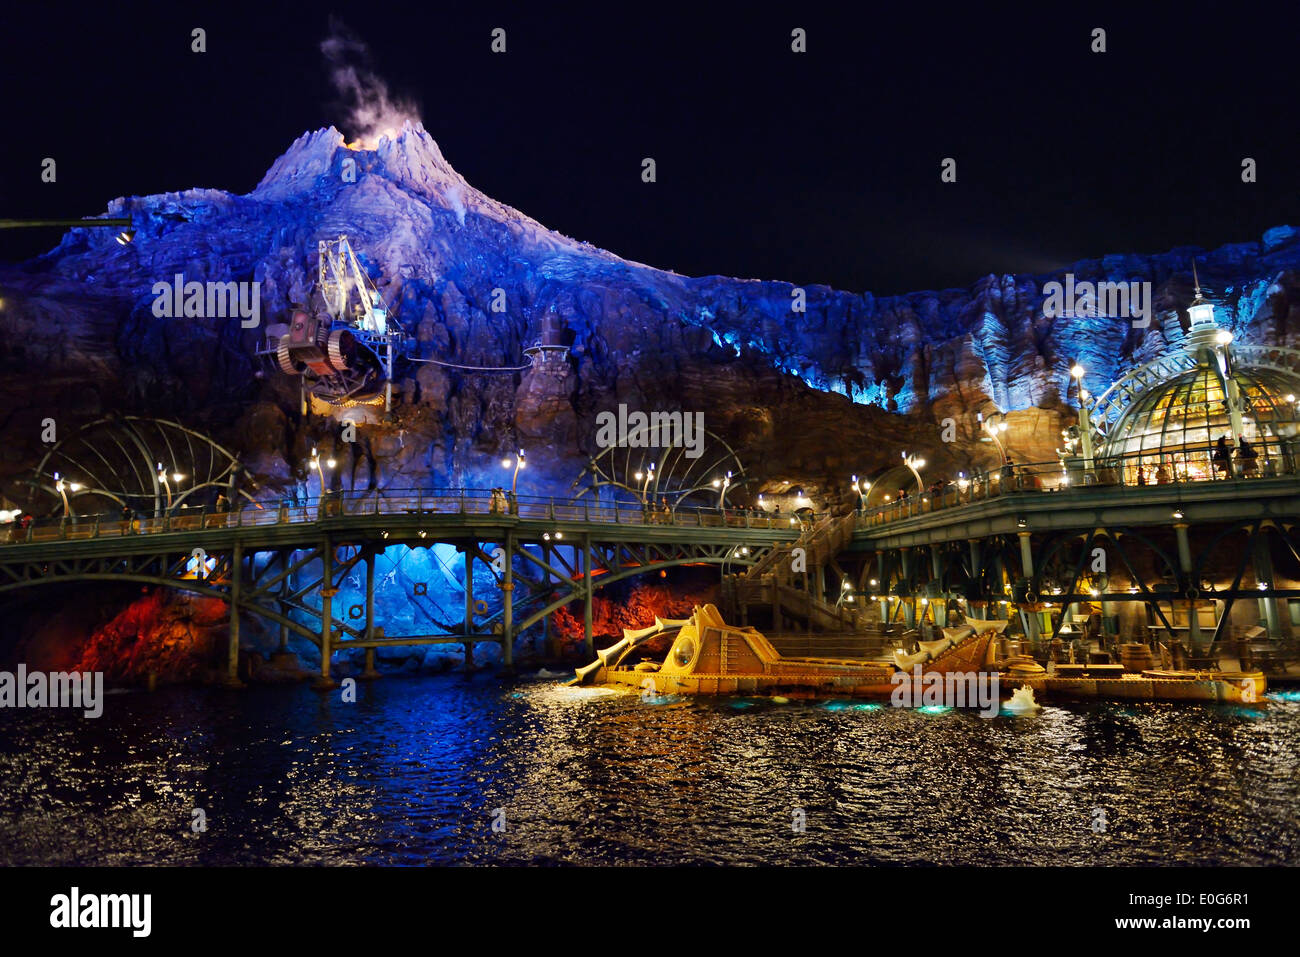 Tokyo Disneysea theme park, Mysterious Island colorful nighttime scenery. Japan. Stock Photo